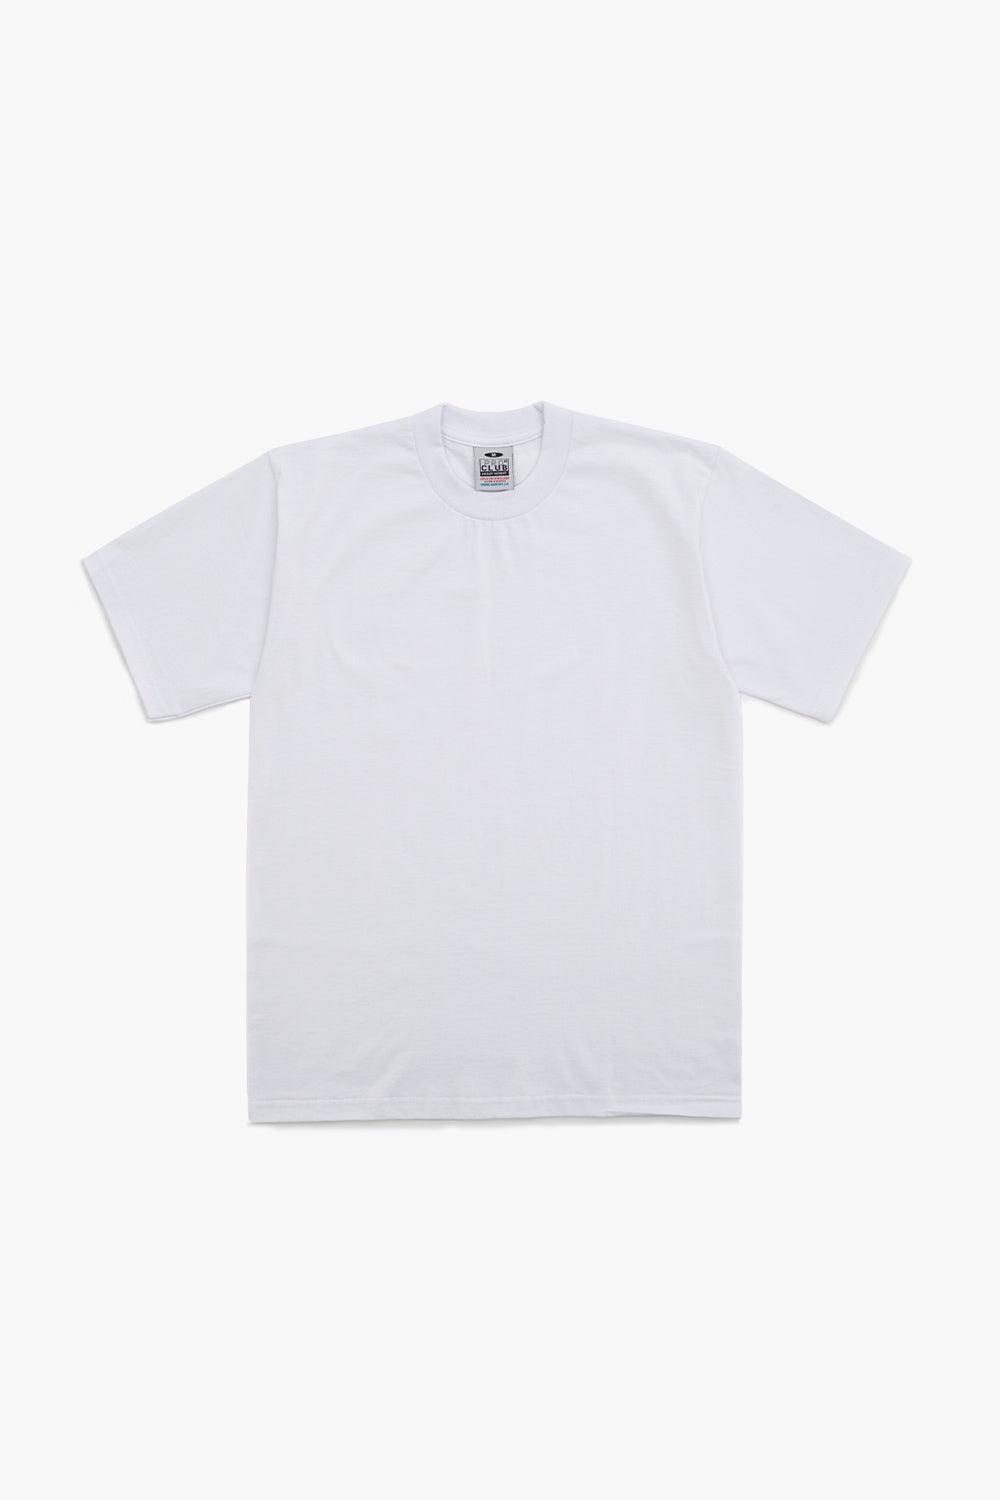 PROCLUB T-shirt Heavyweight Blanc - suuupply